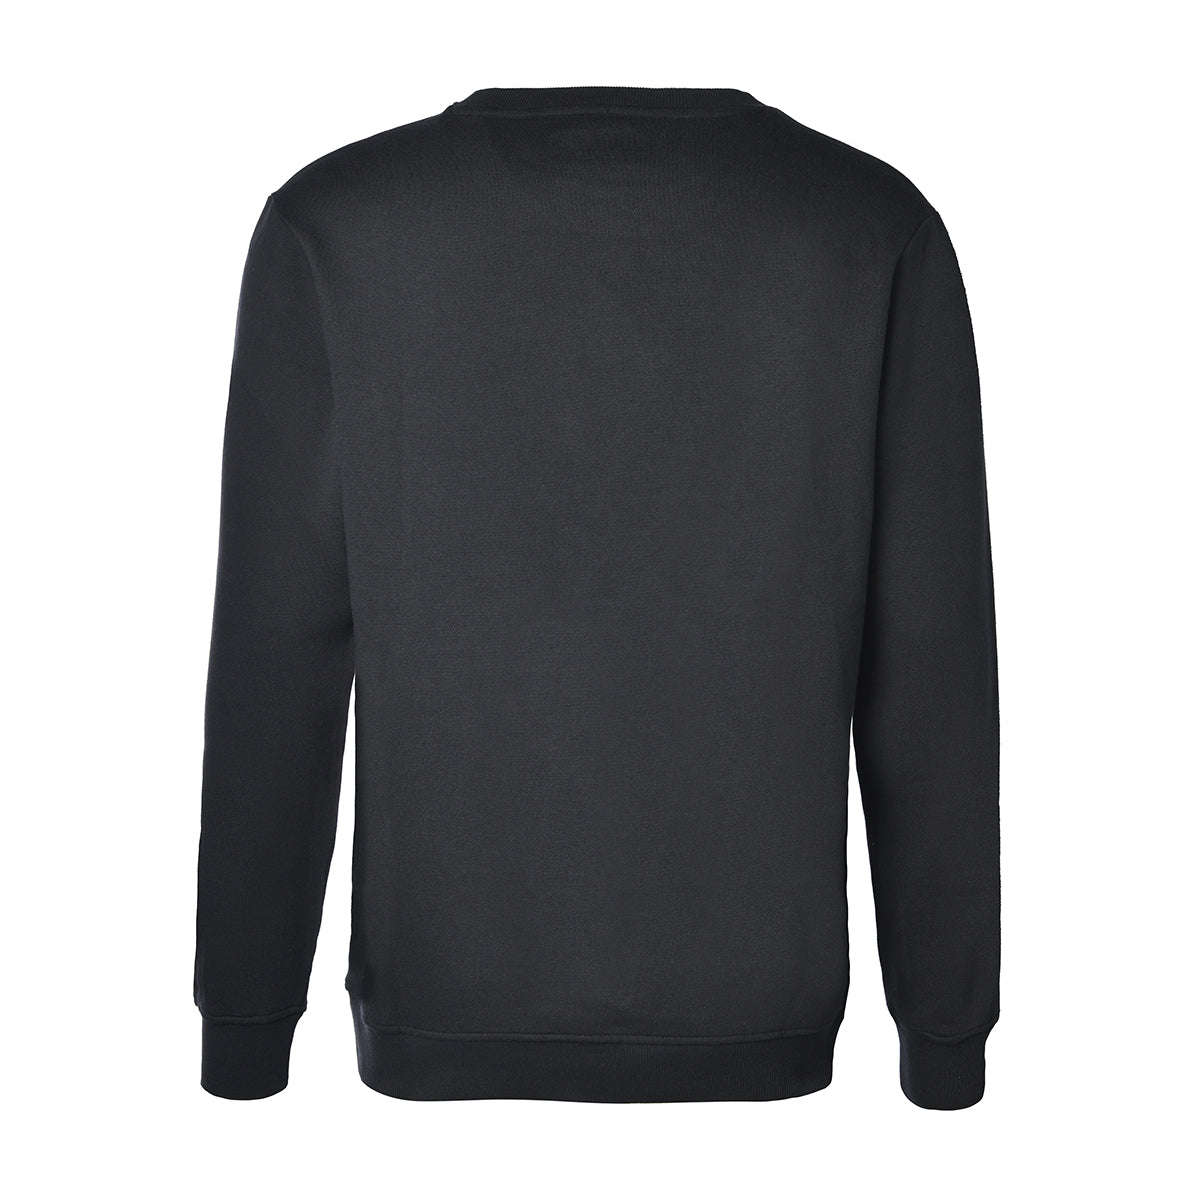 Sweatshirt Cury Noir homme - image 2